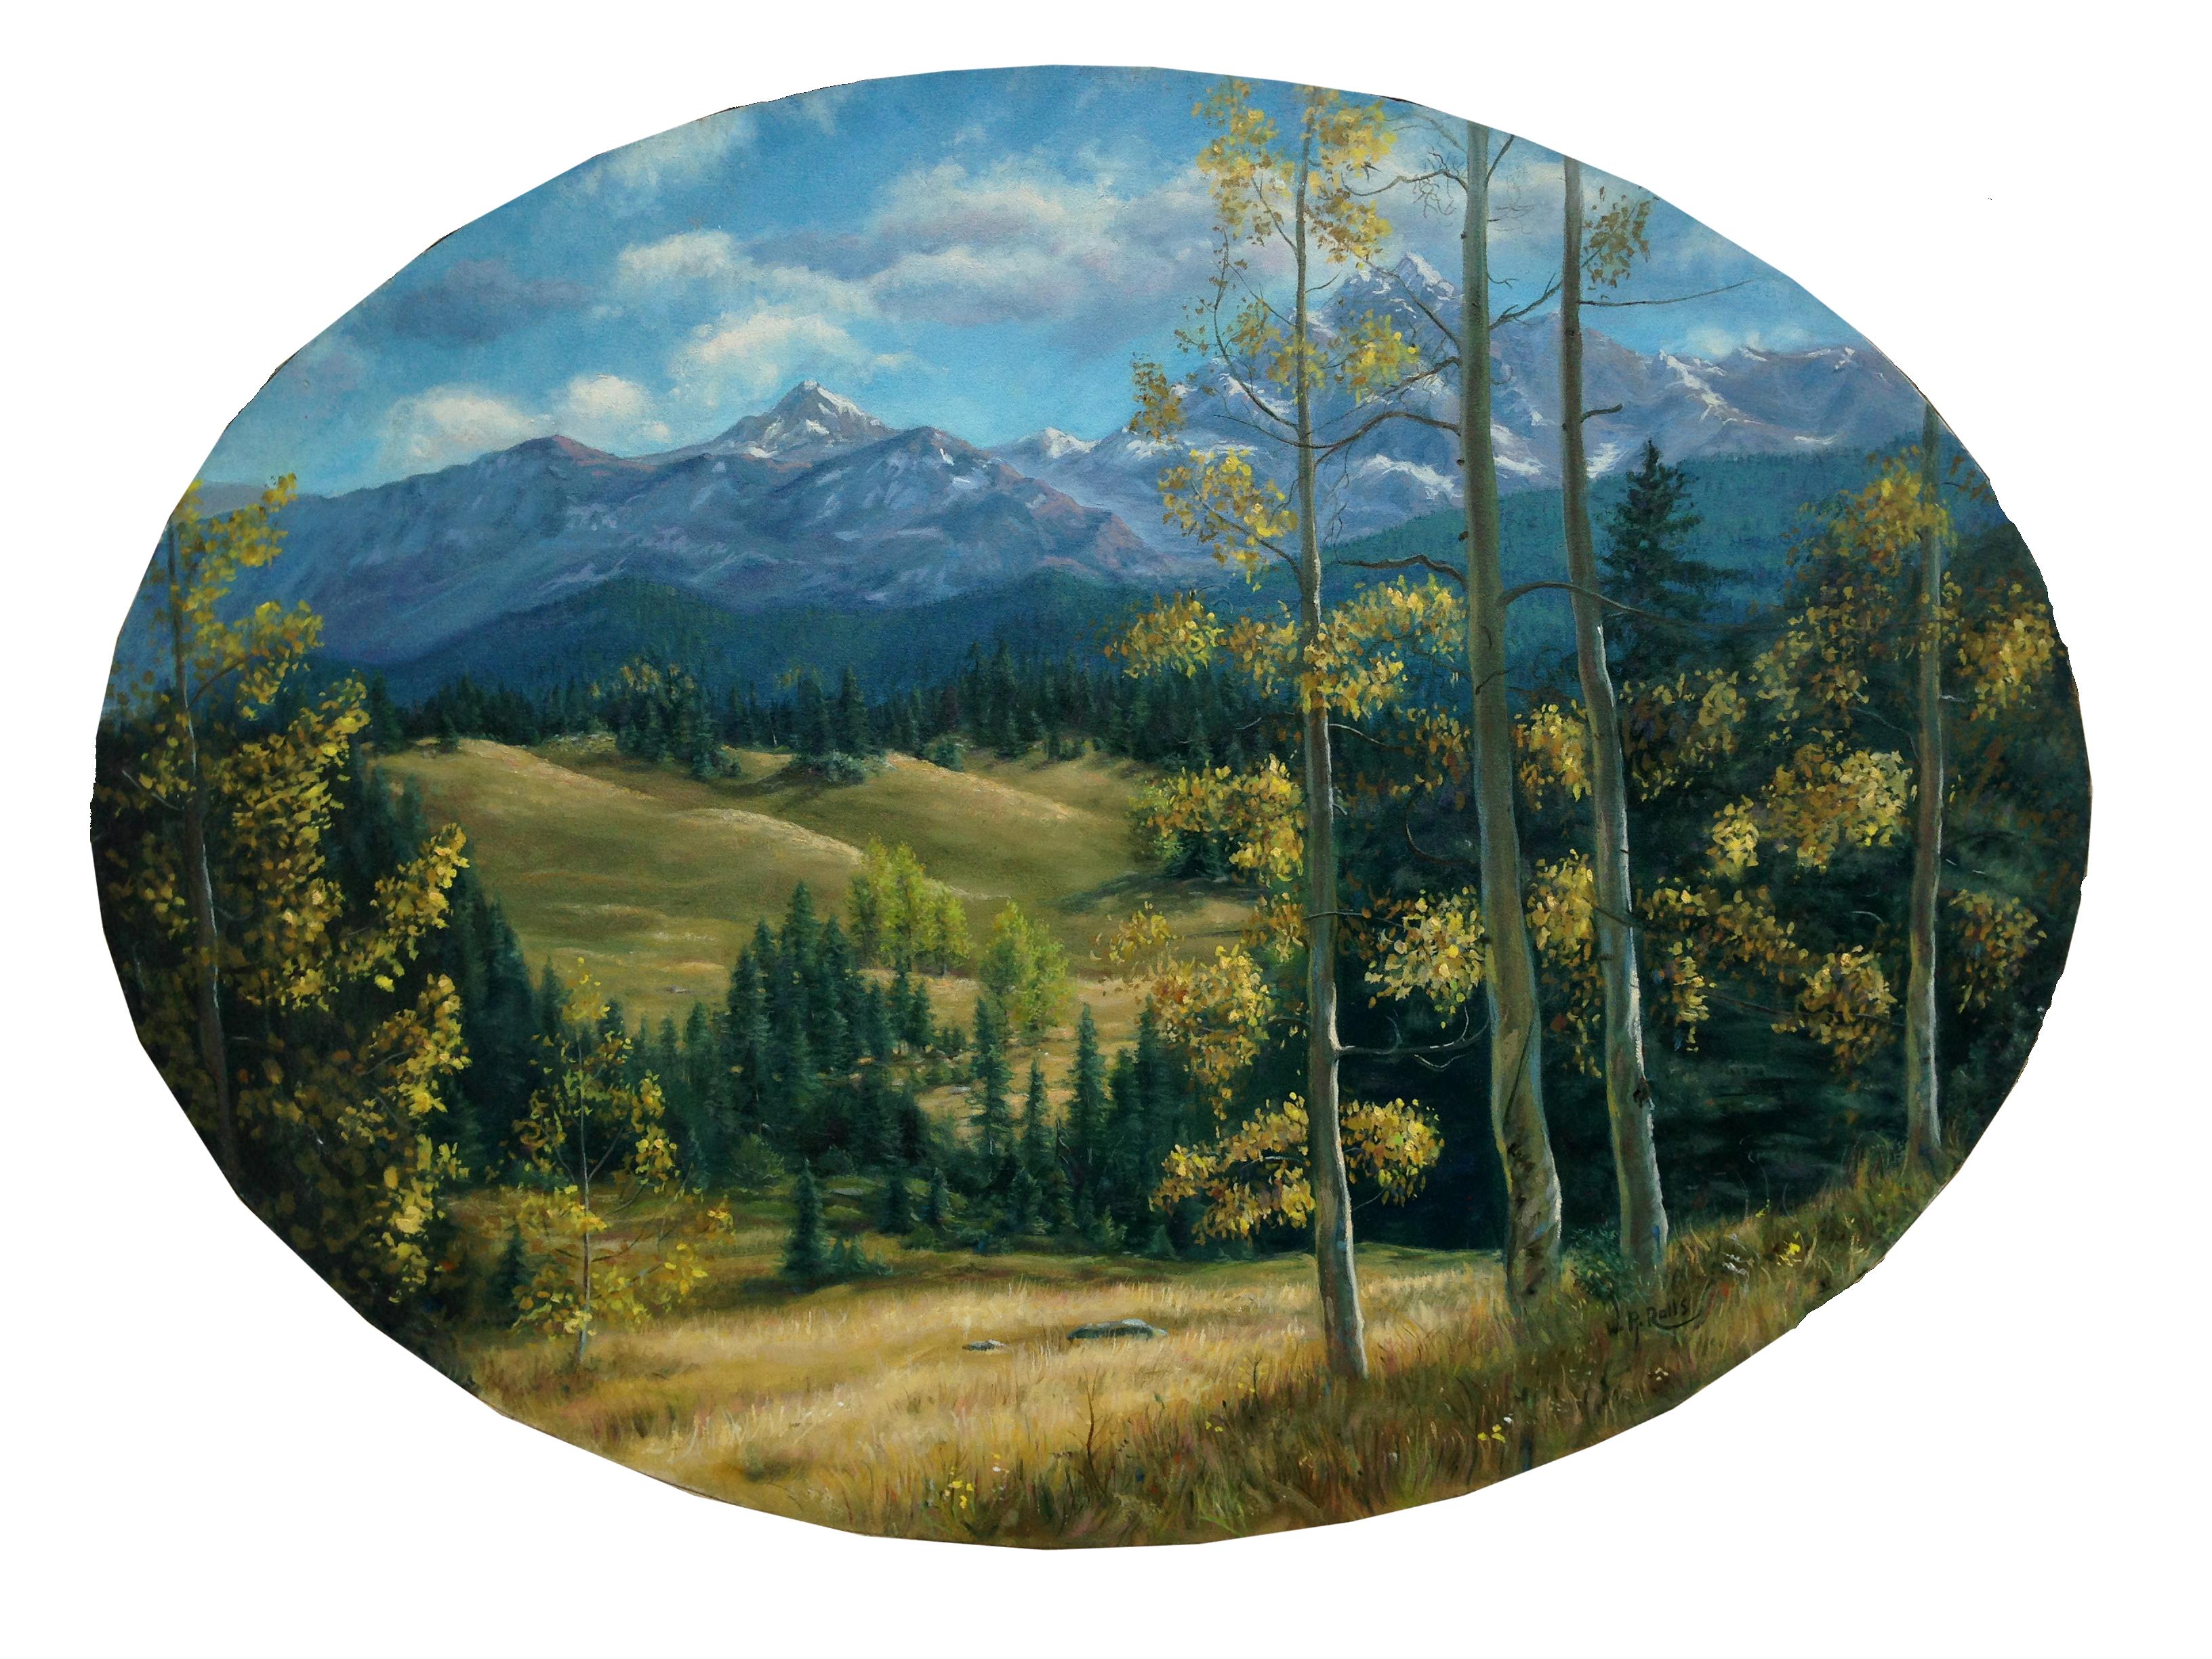 W. R. Rolls Landscape Painting - Sierra Mountains in Autumn - Landscape in Oil on Oval Canvas